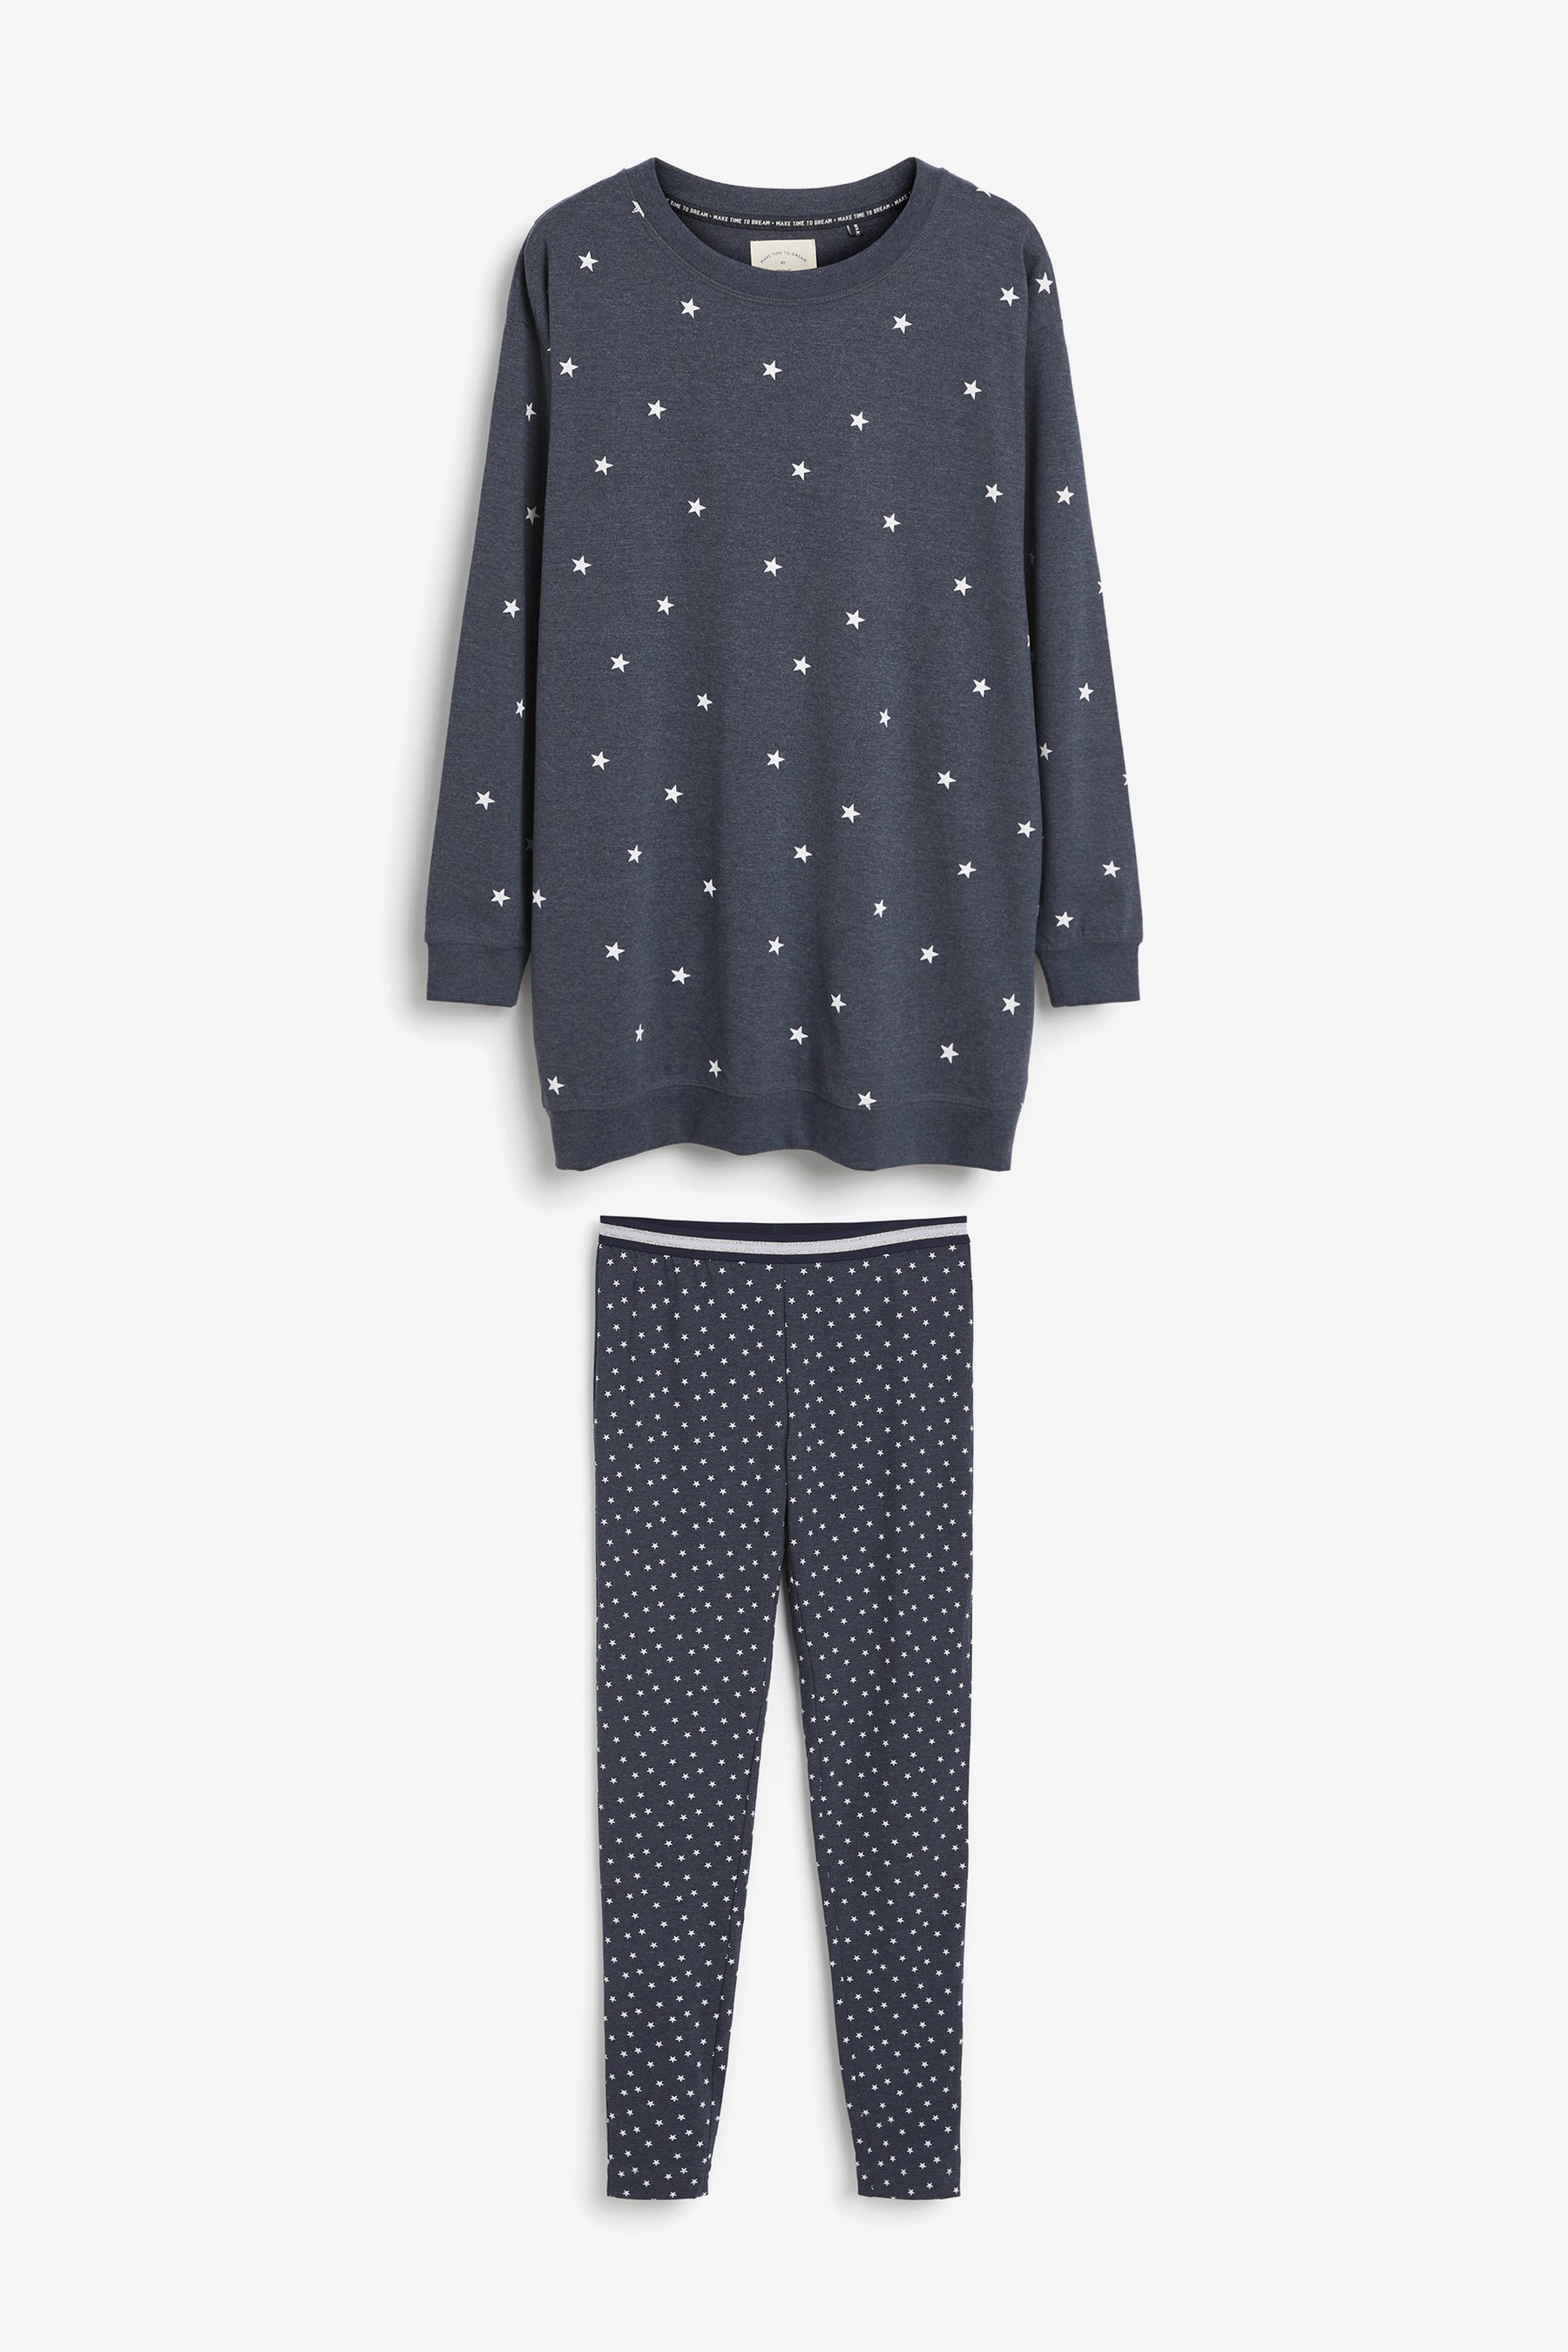 Cotton Tunic And Legging Pyjamas Set